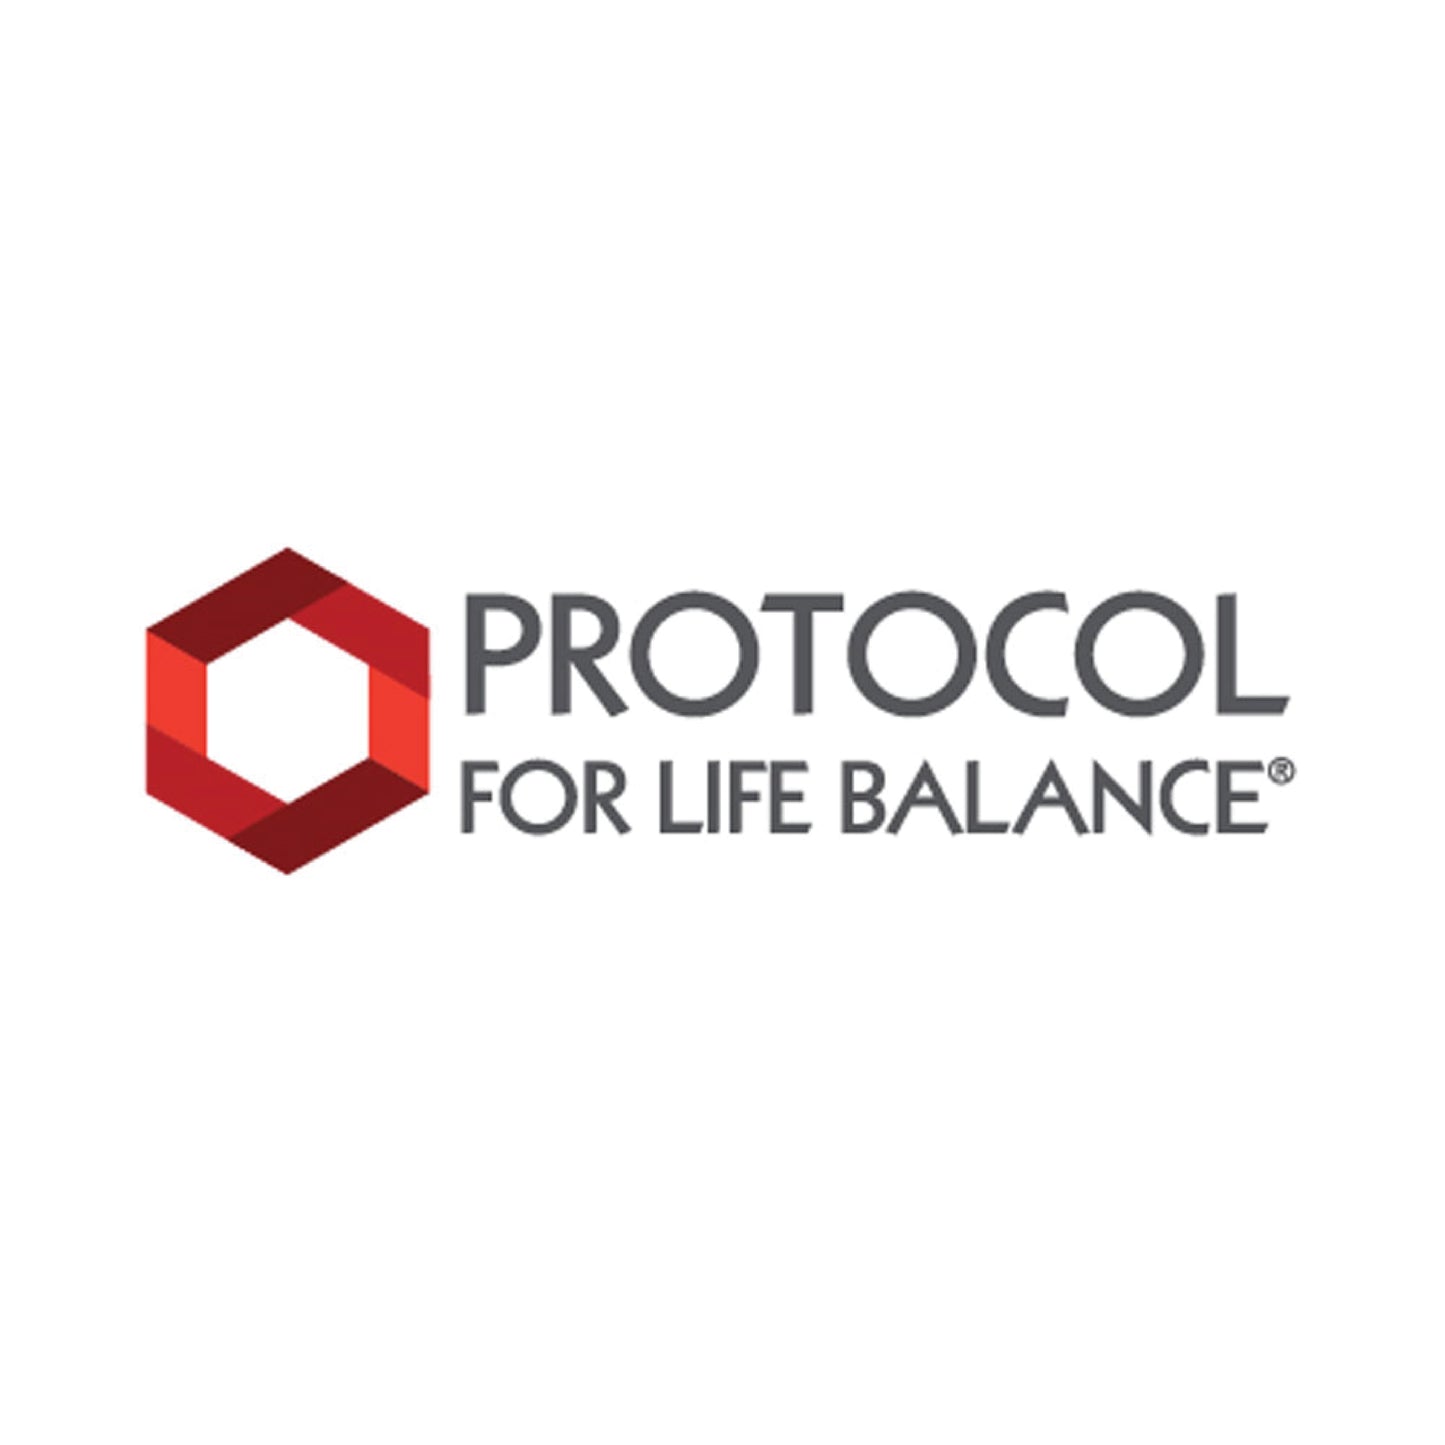 Protocol for Life Balance, Bone Support Formula, 180 Capsules